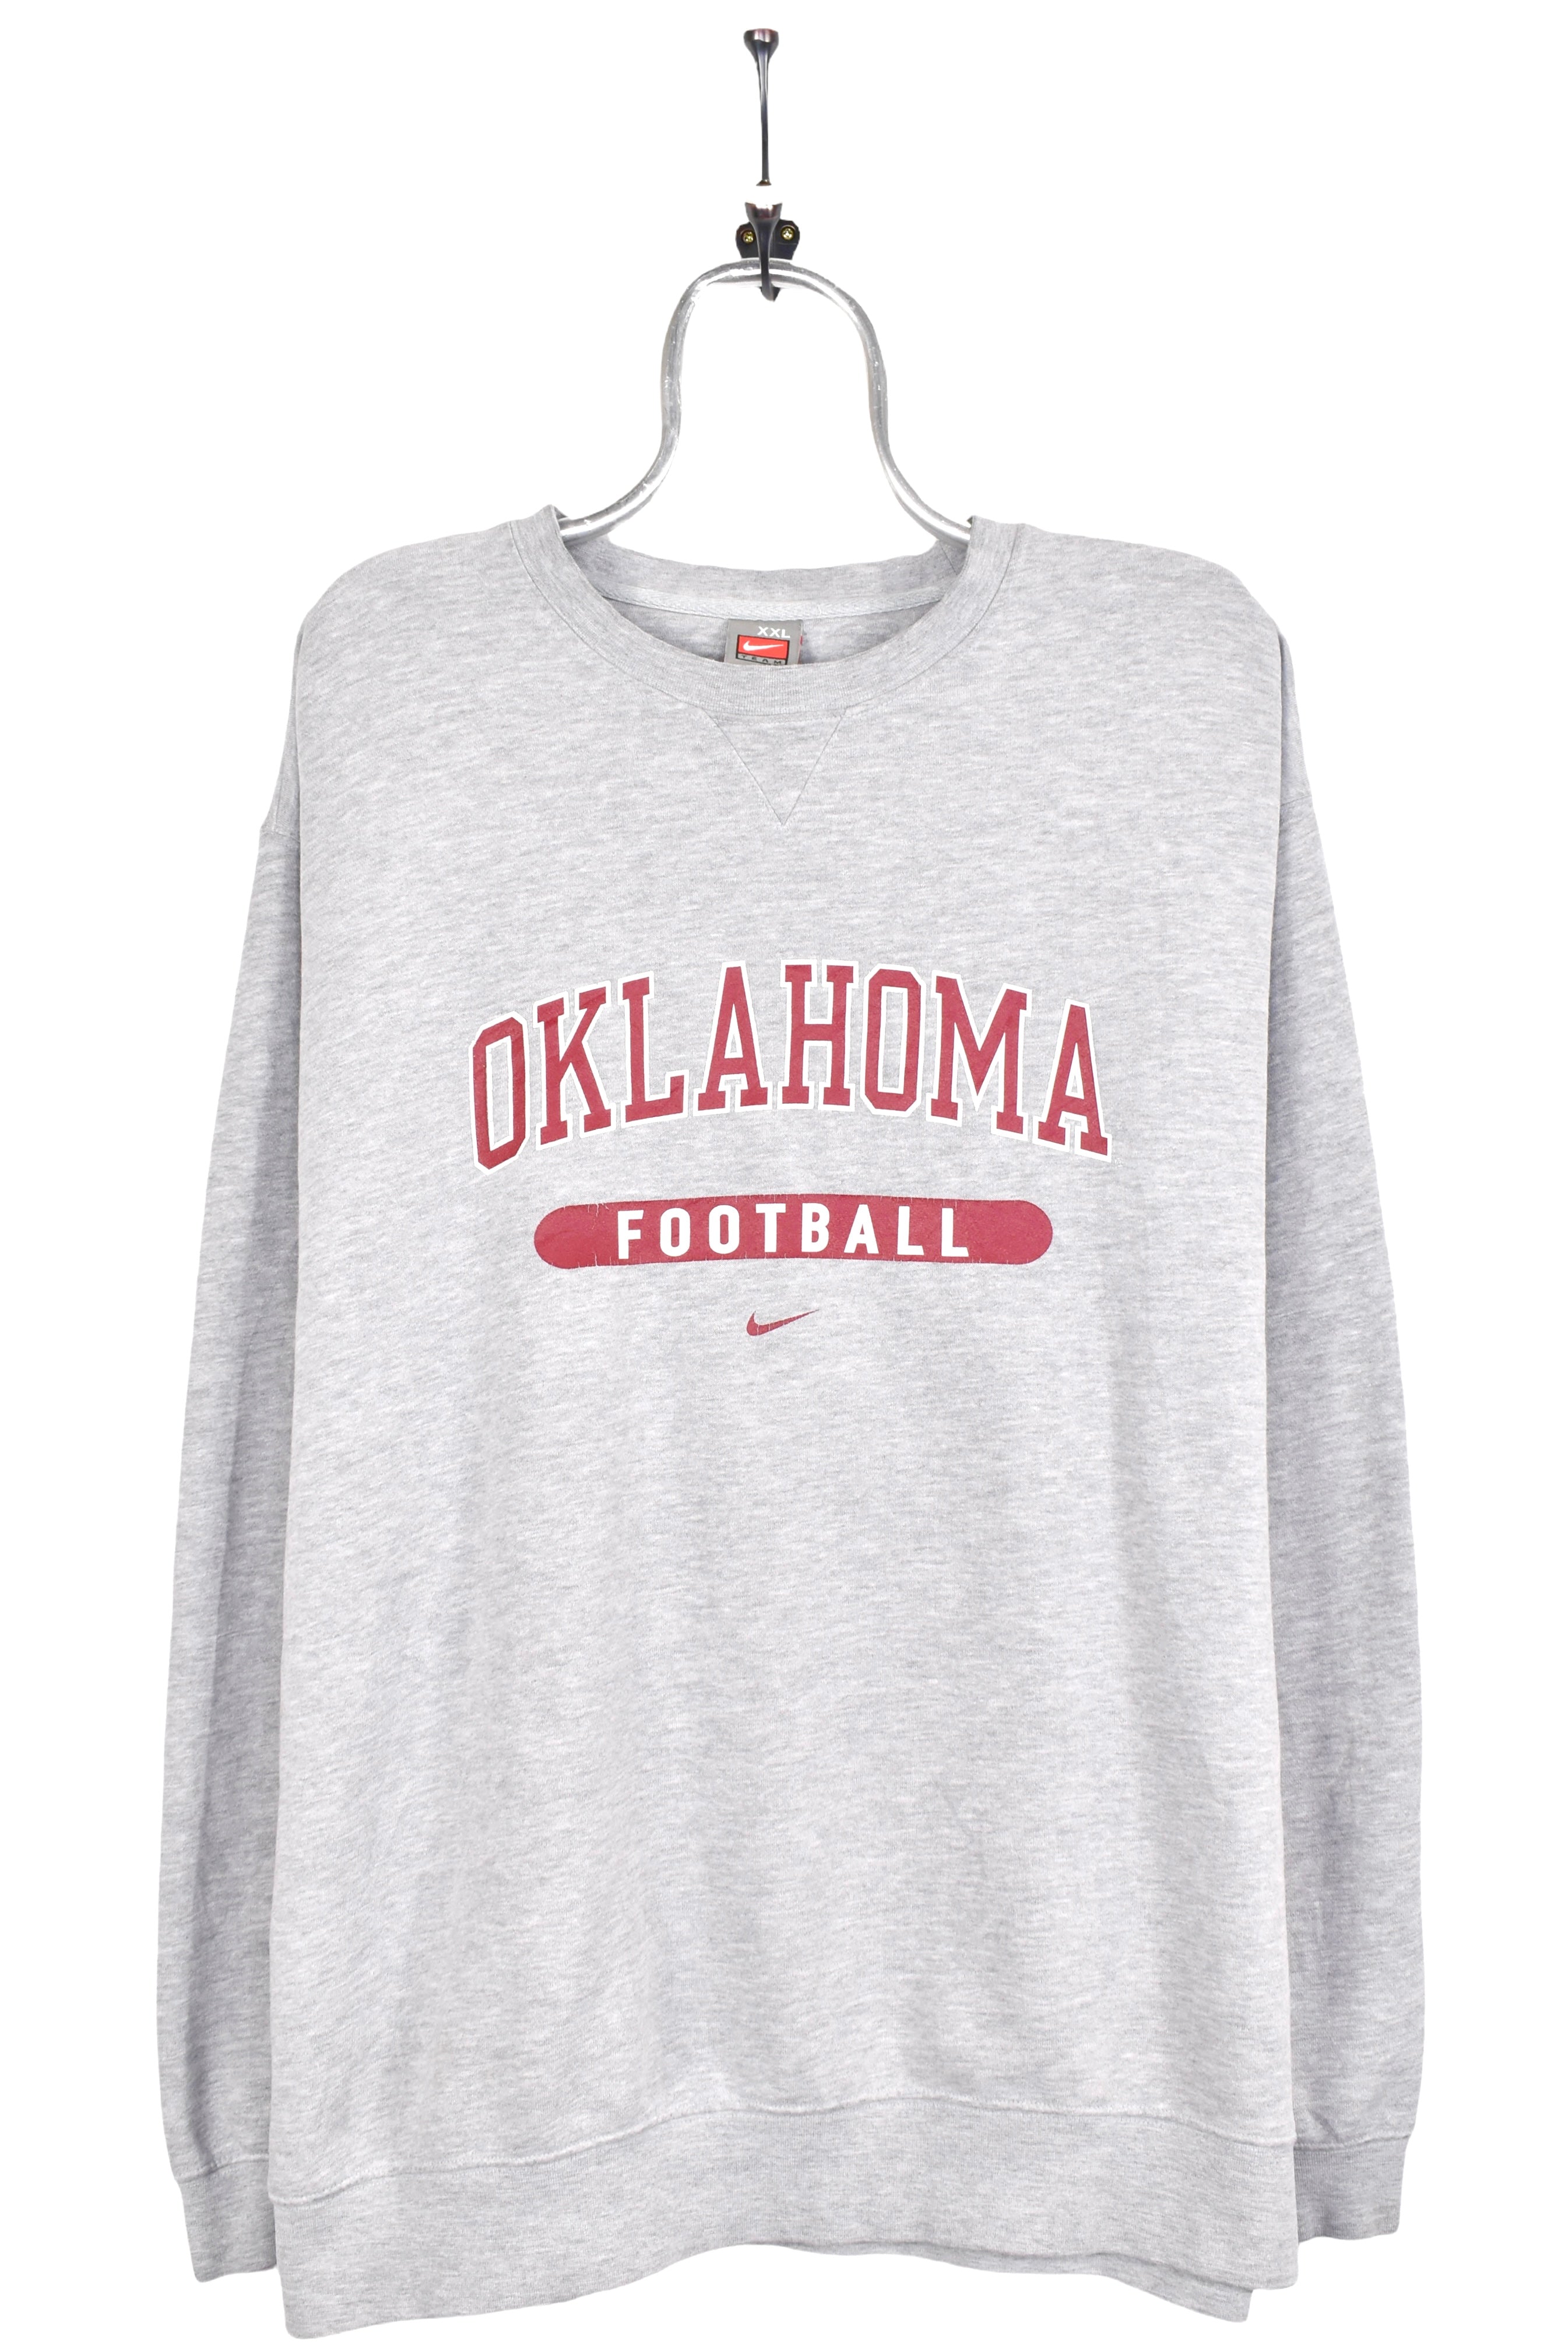 Vintage Oklahoma University sweatshirt, grey football graphic crewneck - AU XXL COLLEGE